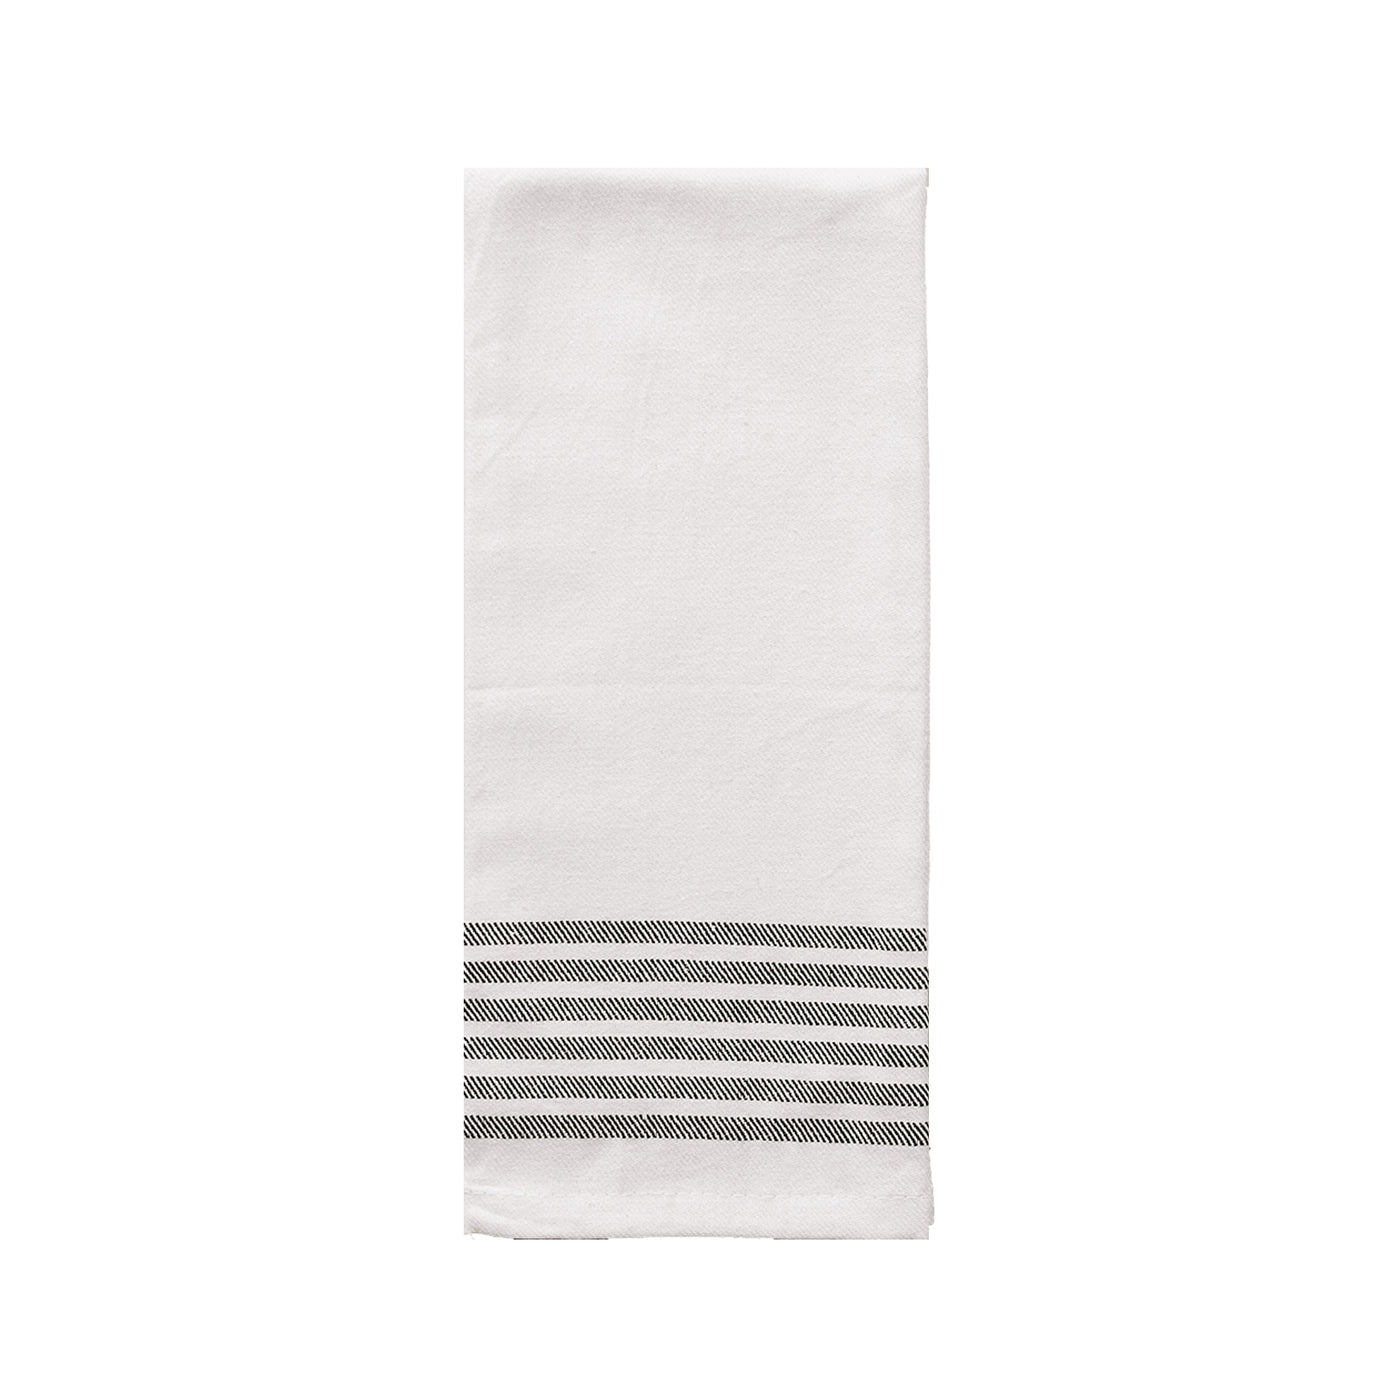 Striped Tea Towel - Six Stripes - Sweet Water Decor - Hand Towels